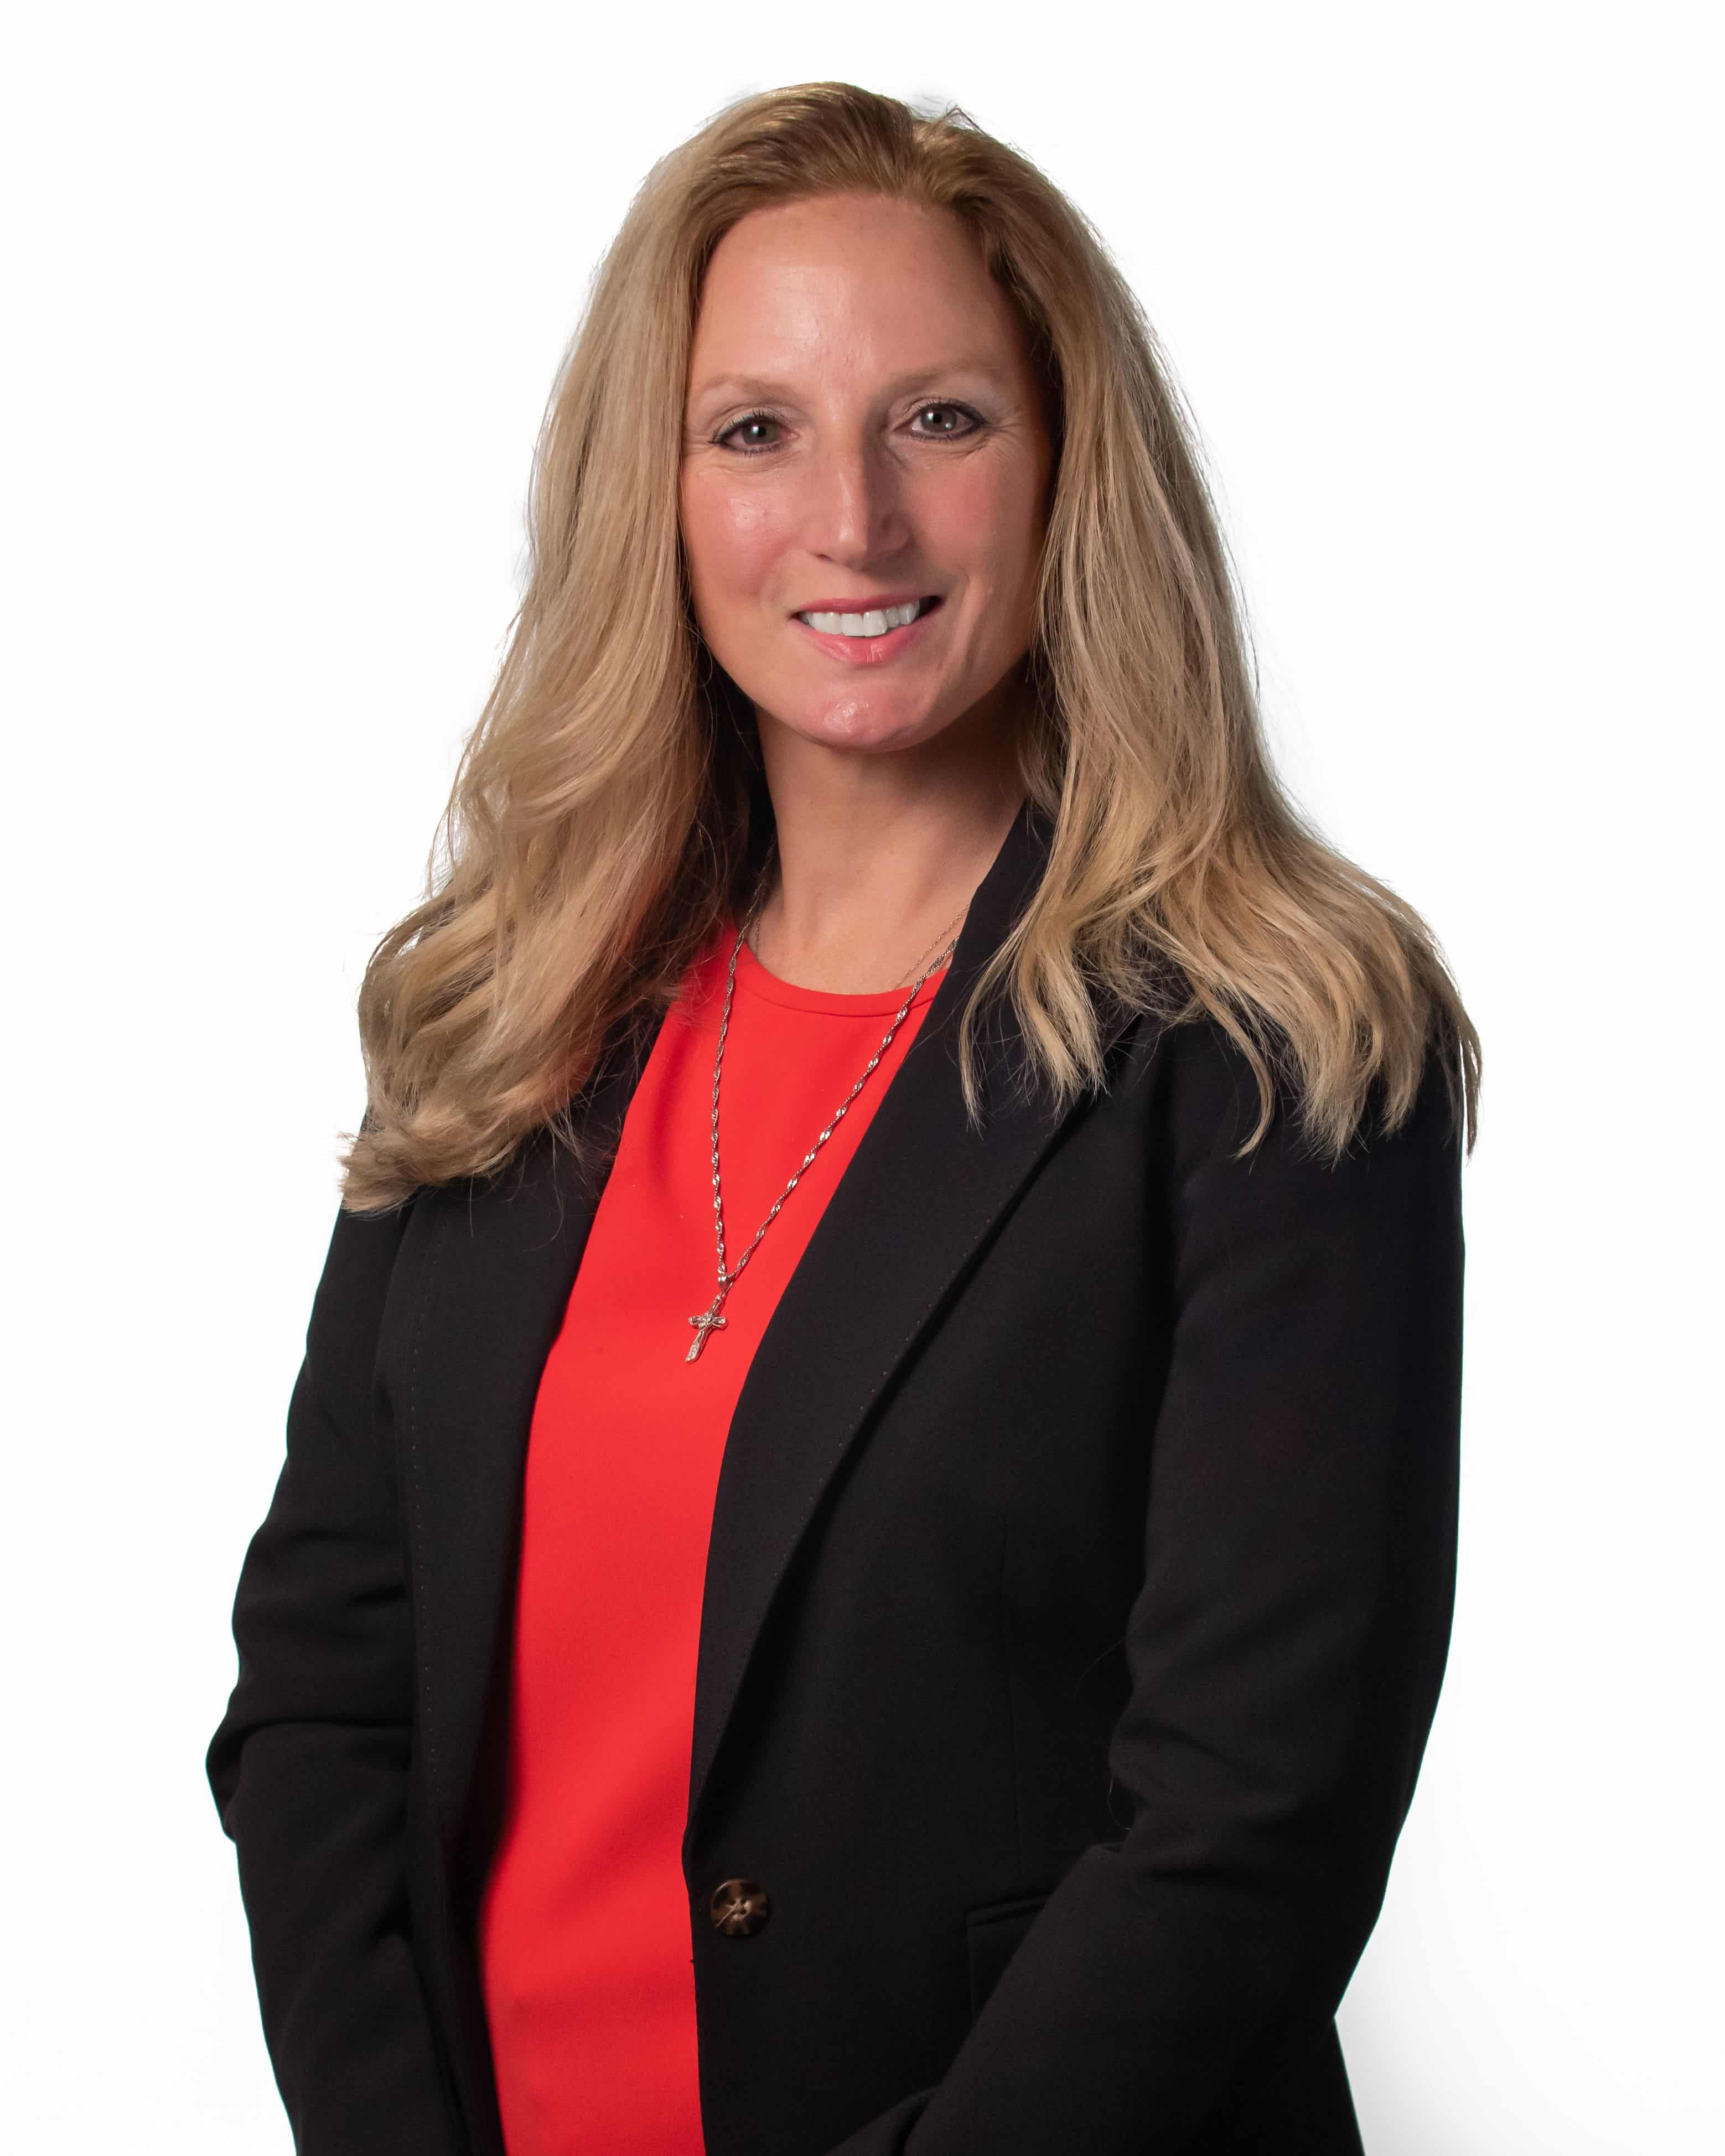 IMG 0084 - Theresa LaRock Joins Union Savings Bank as a Residential Mortgage Loan Originator and Jordan Sanford is Promoted to Residential Mortgage Loan Originator